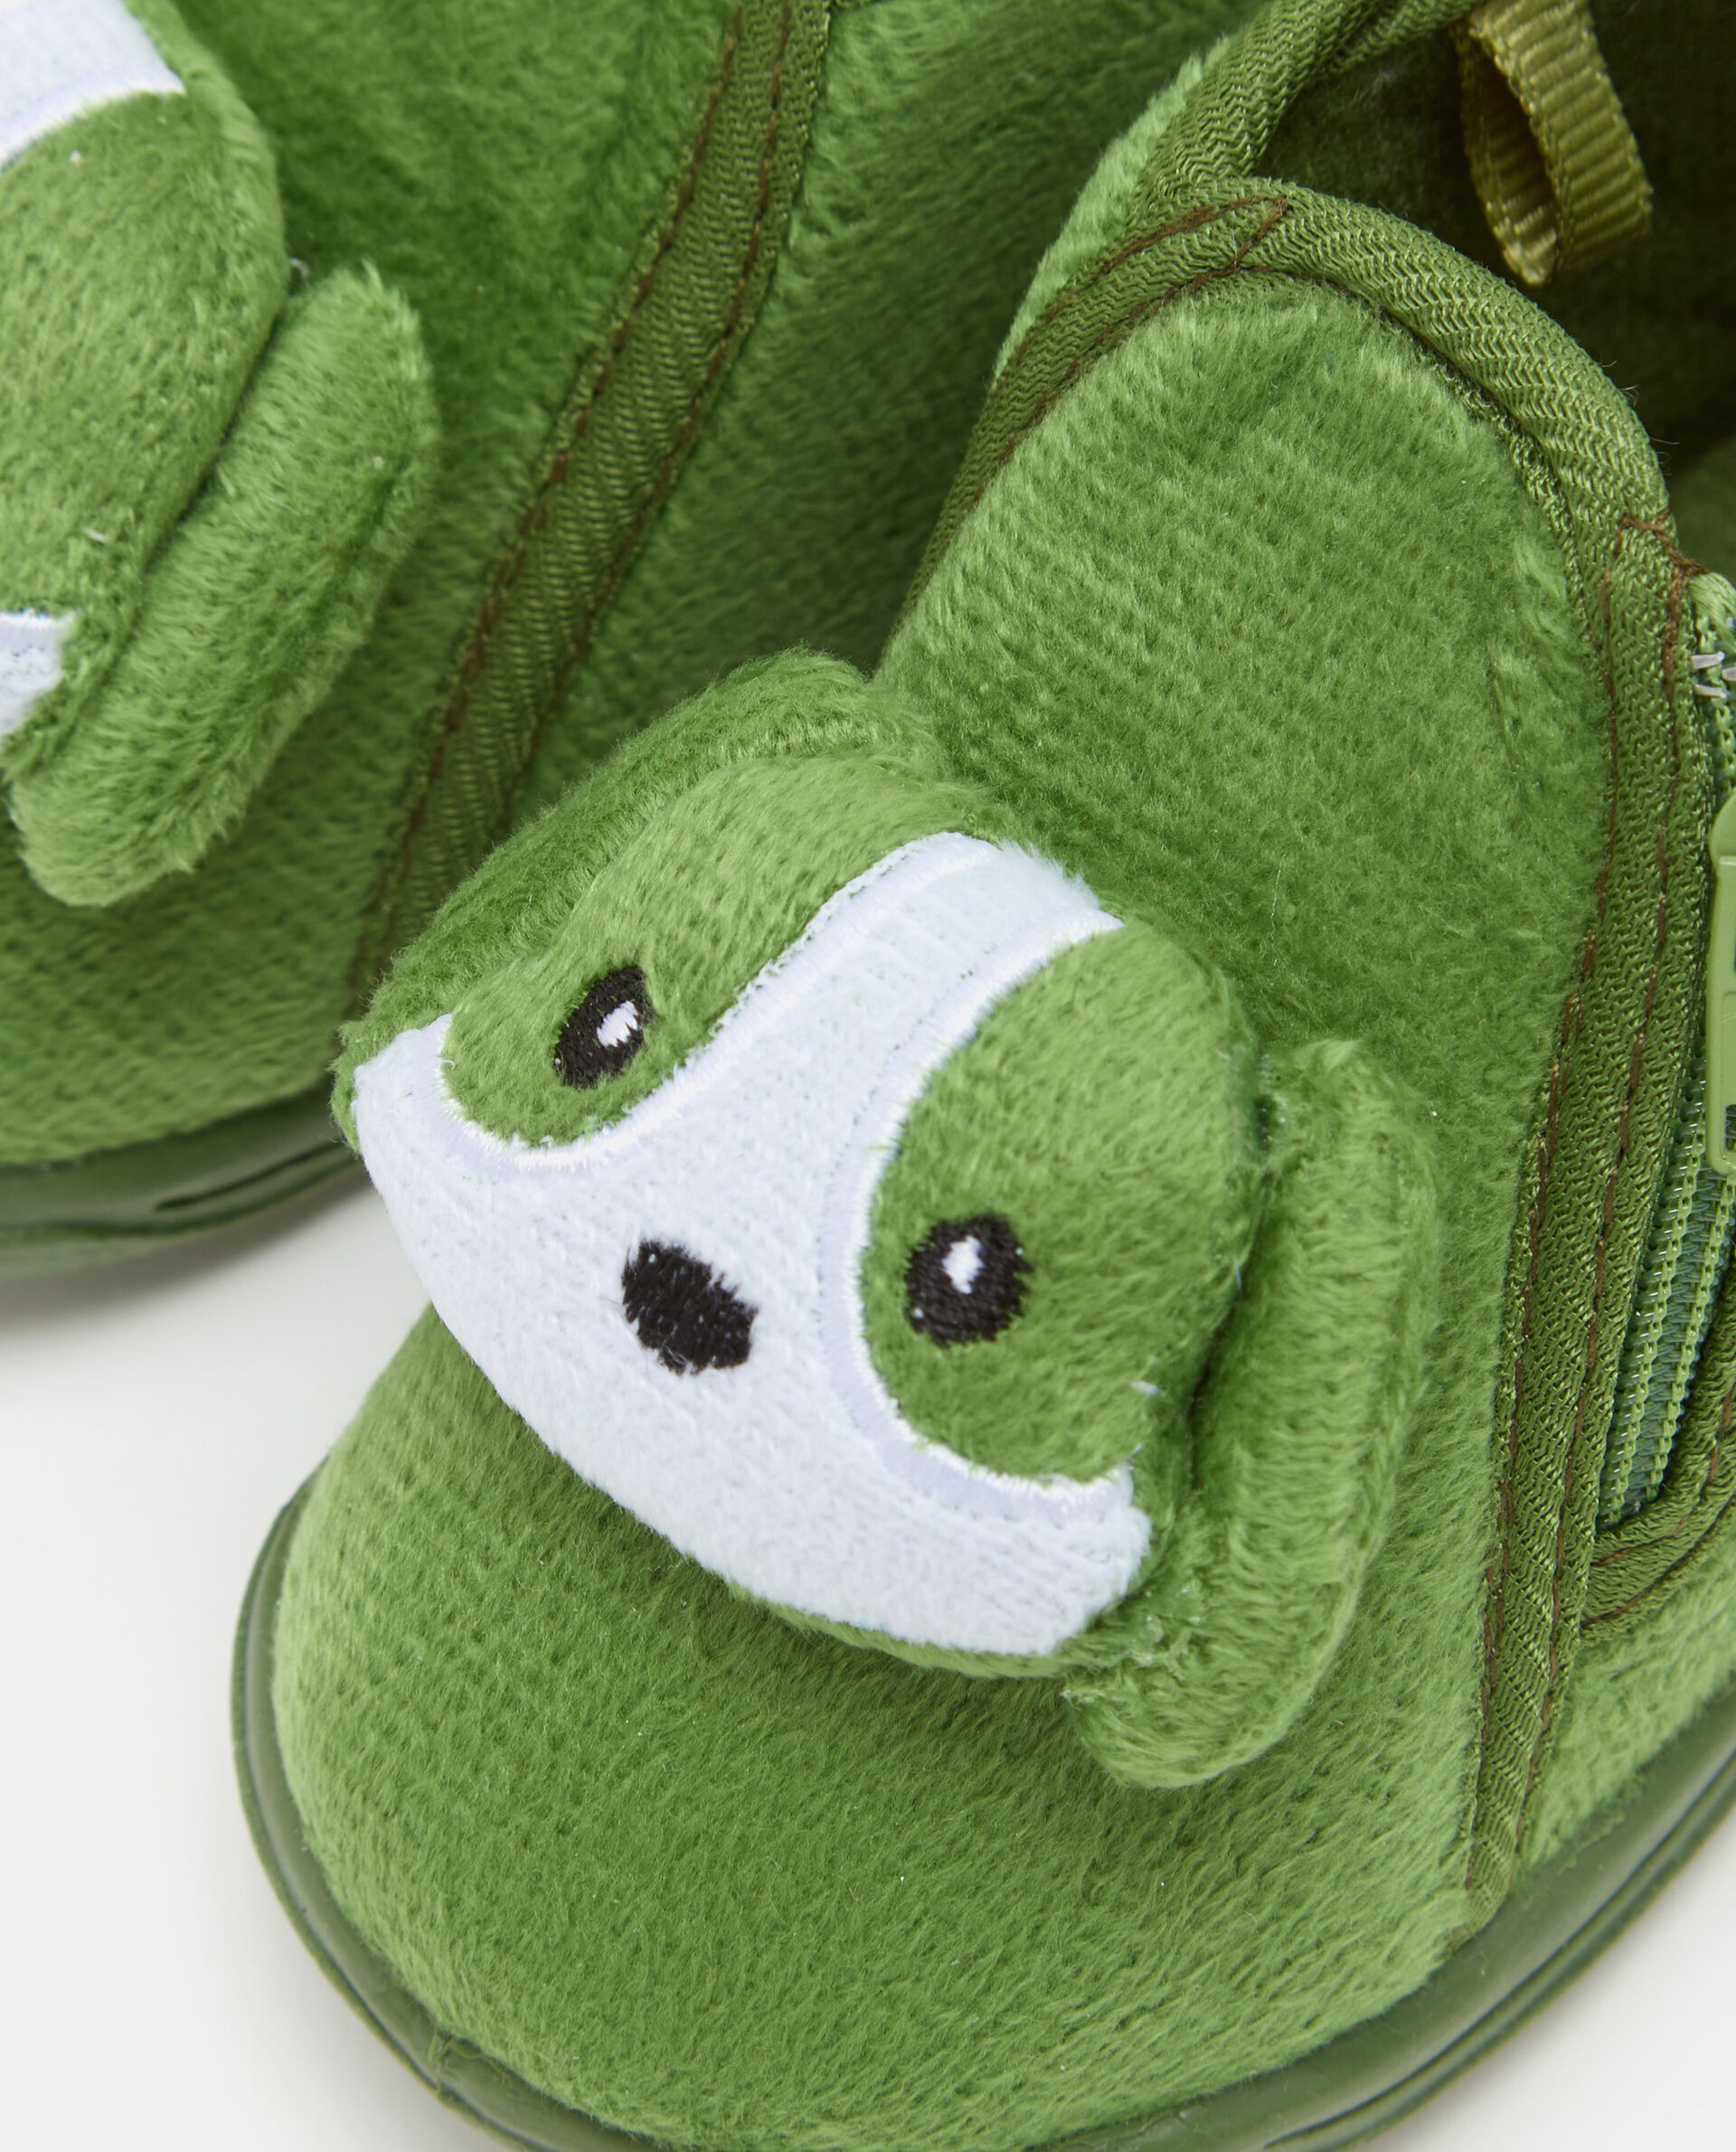 Pantofola con zip neonato